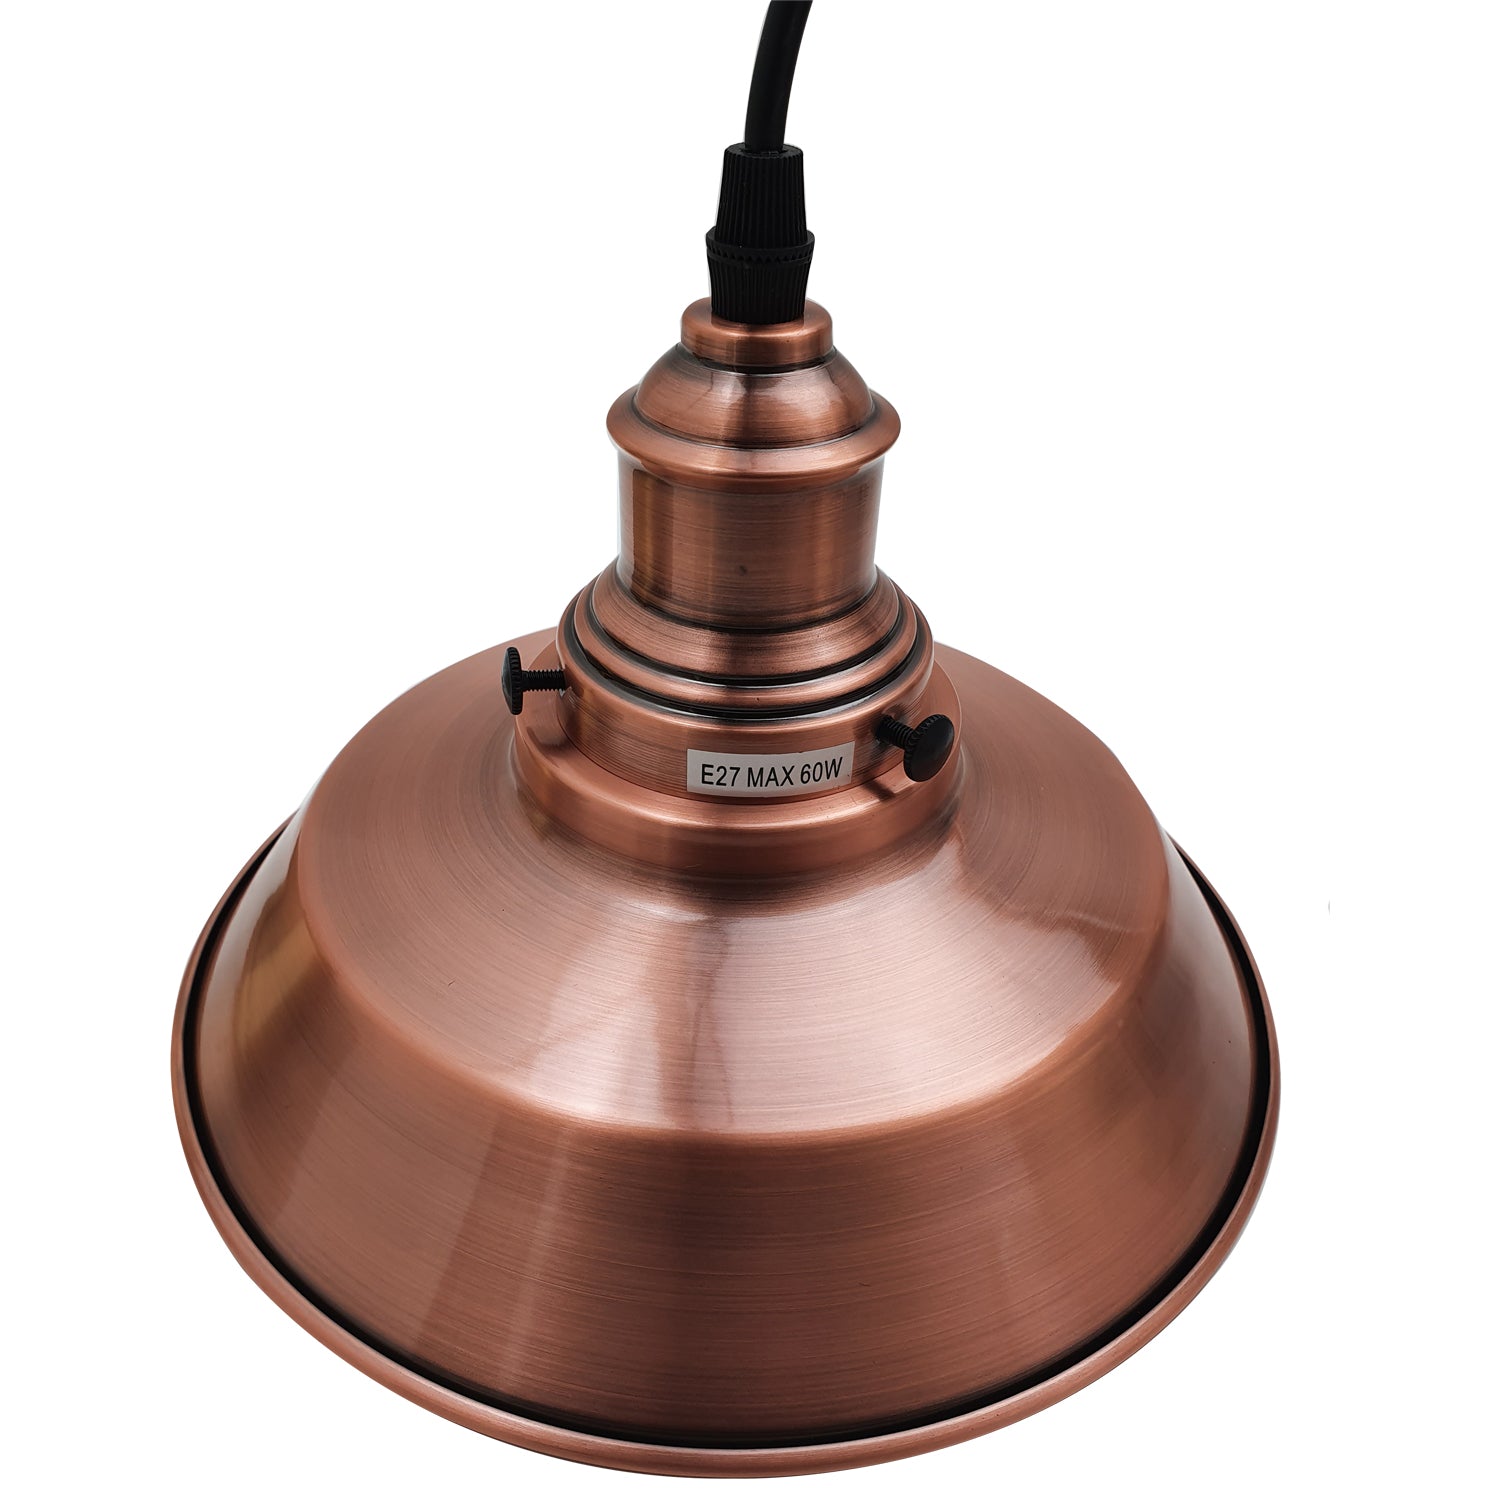 Vintage Industrial Metal Ceiling Pendant Lamp Copper Shade Modern Retro Style~2541 - LEDSone UK Ltd